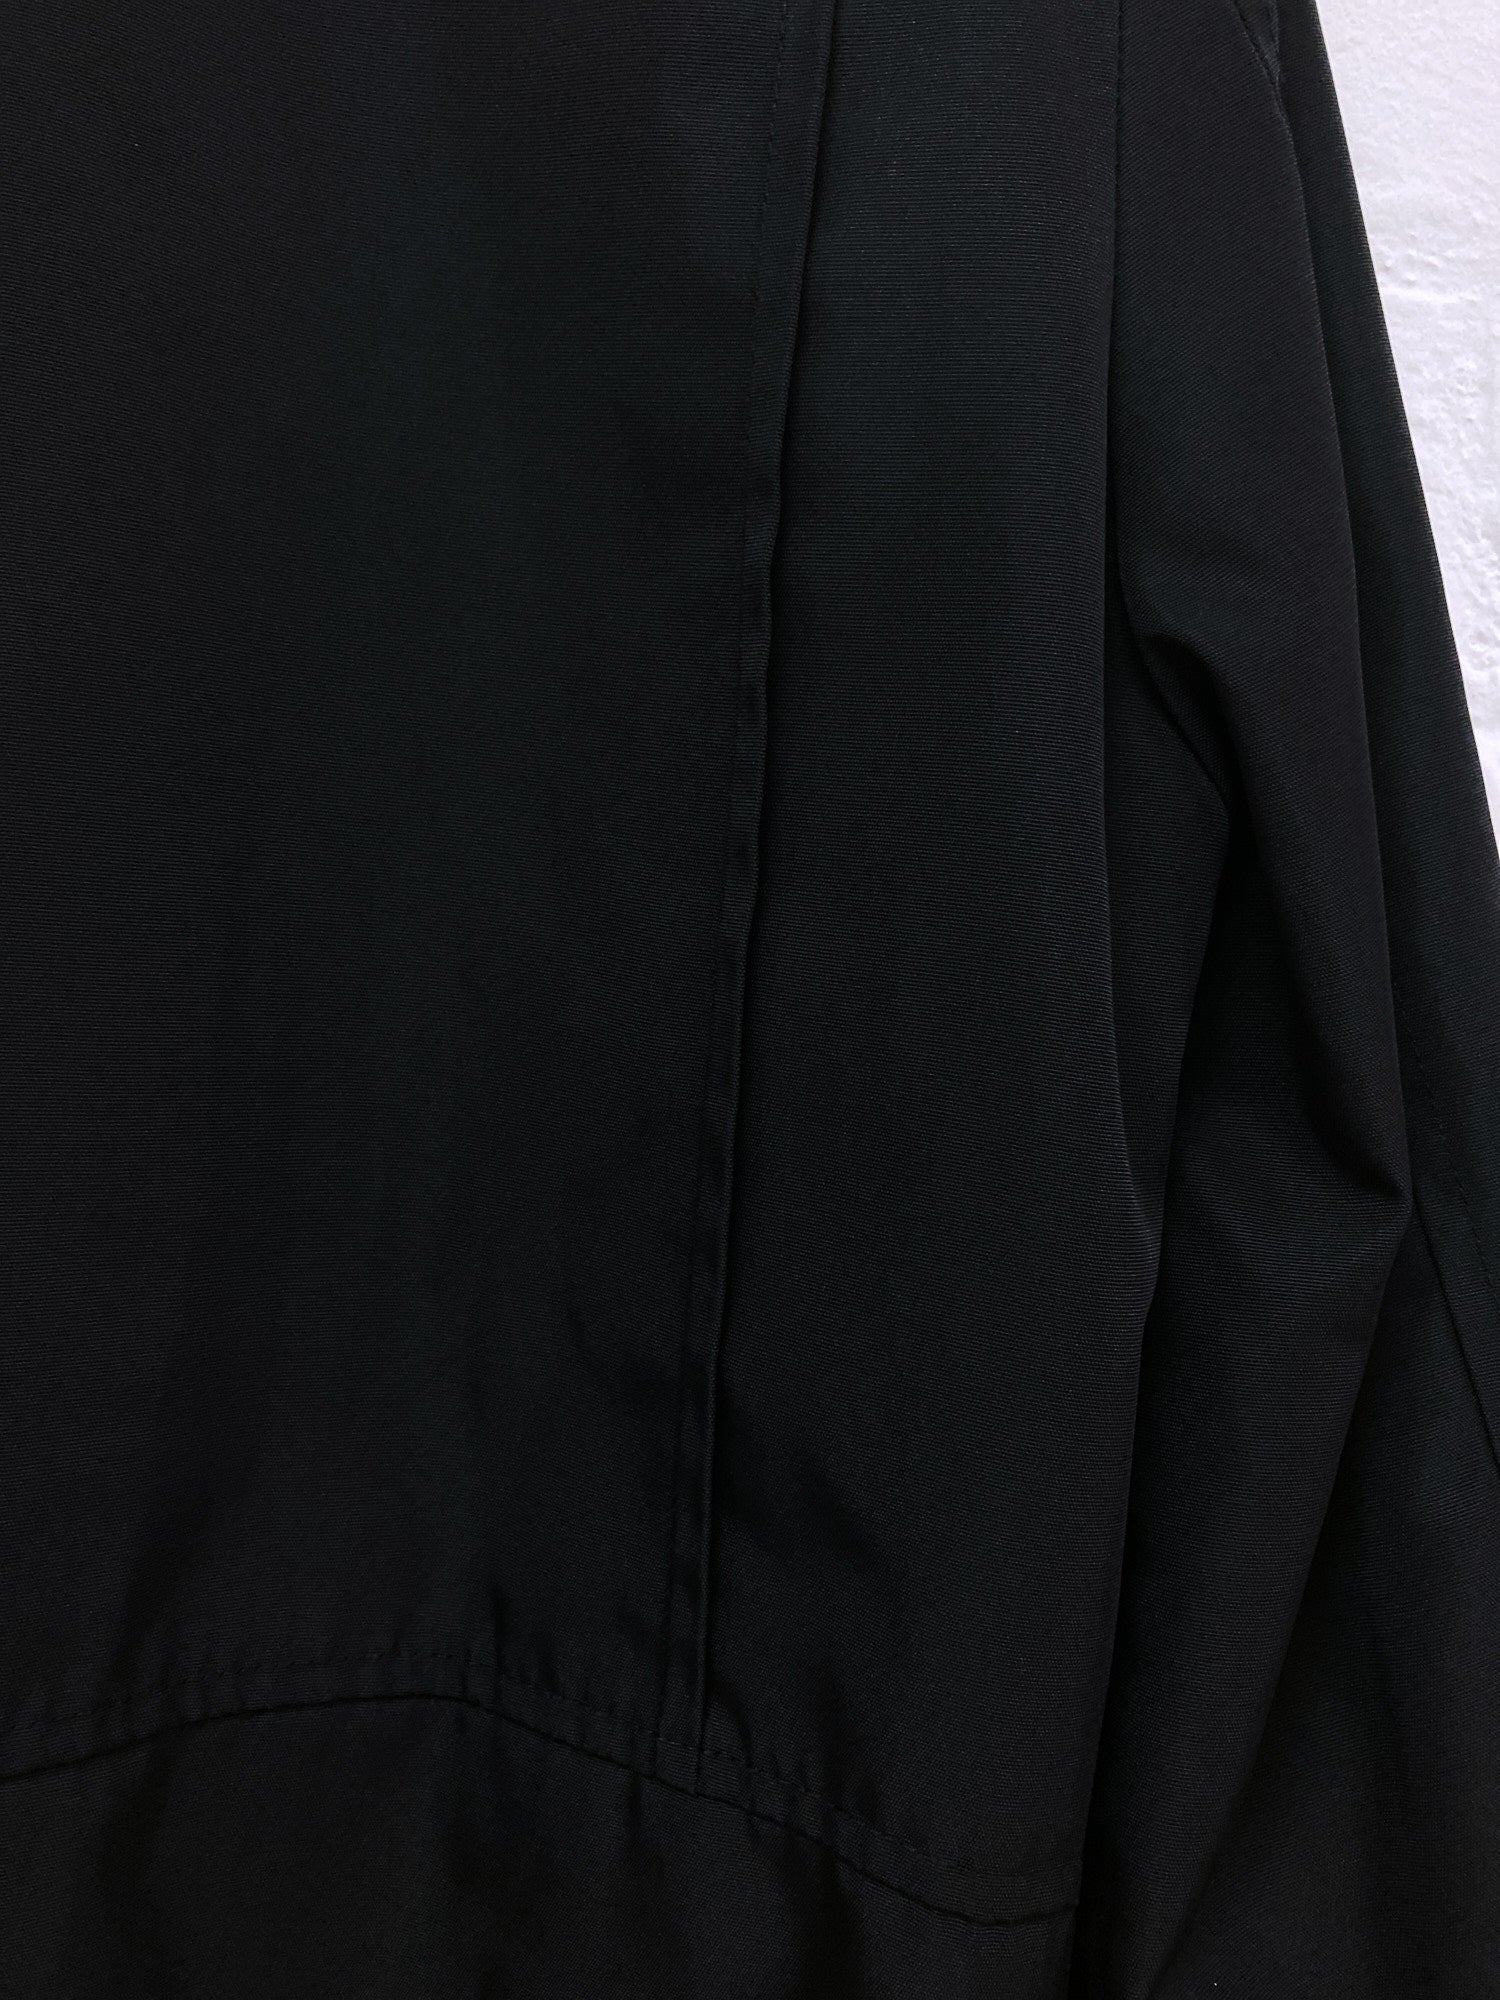 Giuliano Fujiwara black polyester multi pocket bomber jacket - size 44 XS S